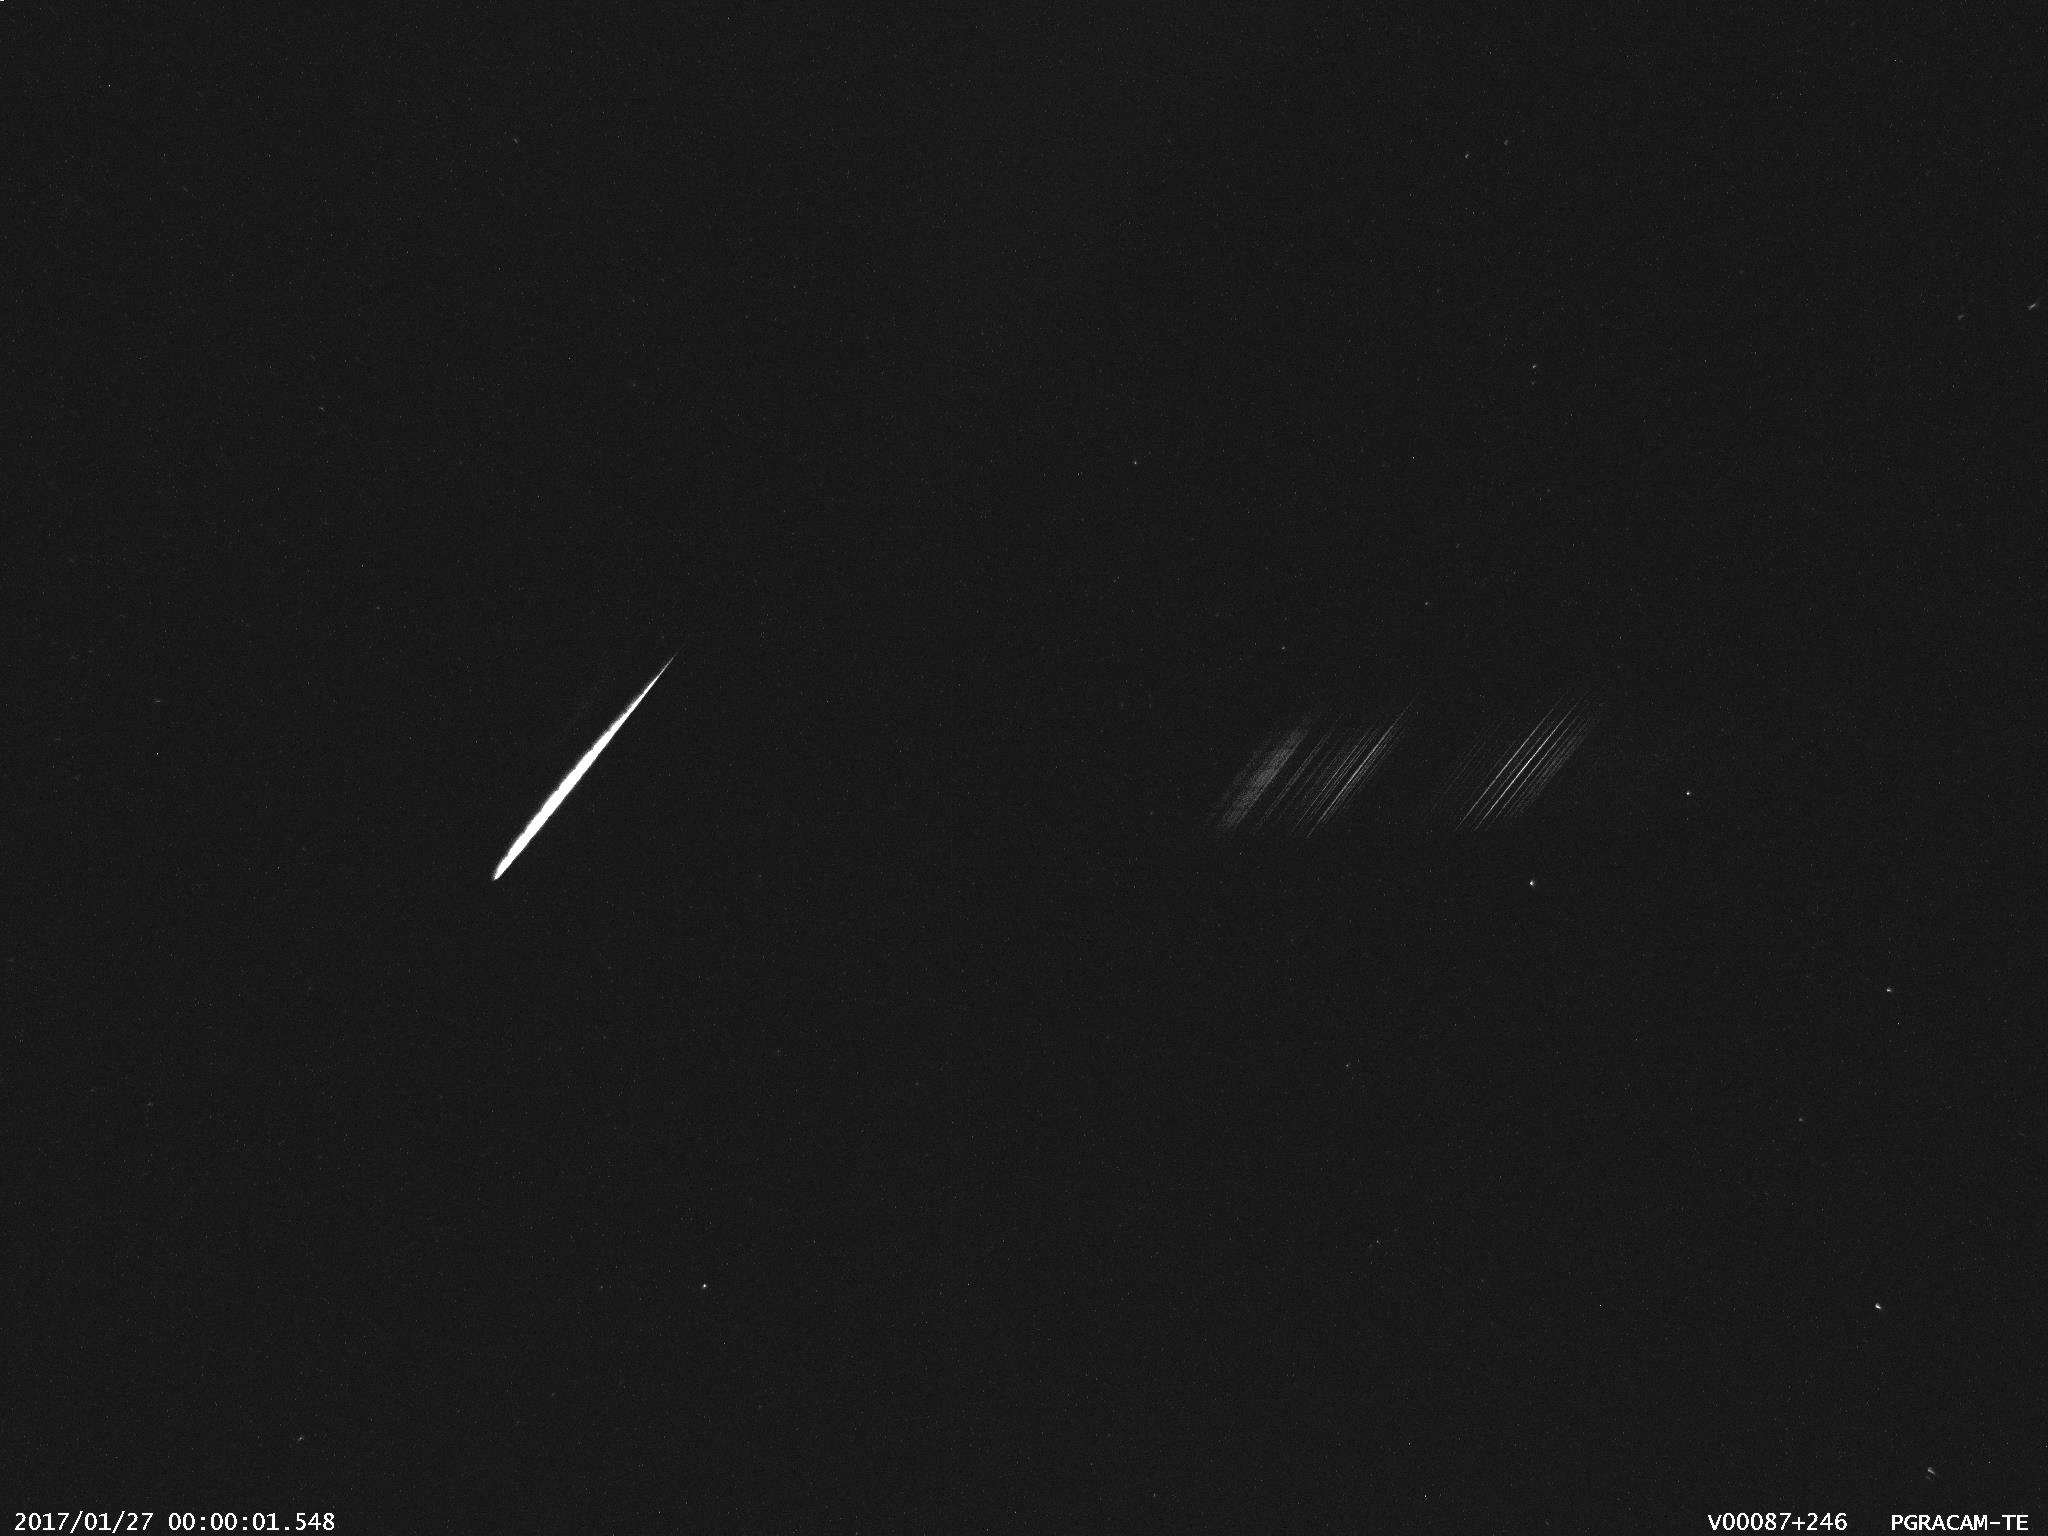 Obr. 13: Spektrum jasného meteoru 20170127_000001, spektrograf PGRACAM-TE. Autor: Hvězdárna Valašské Meziříčí